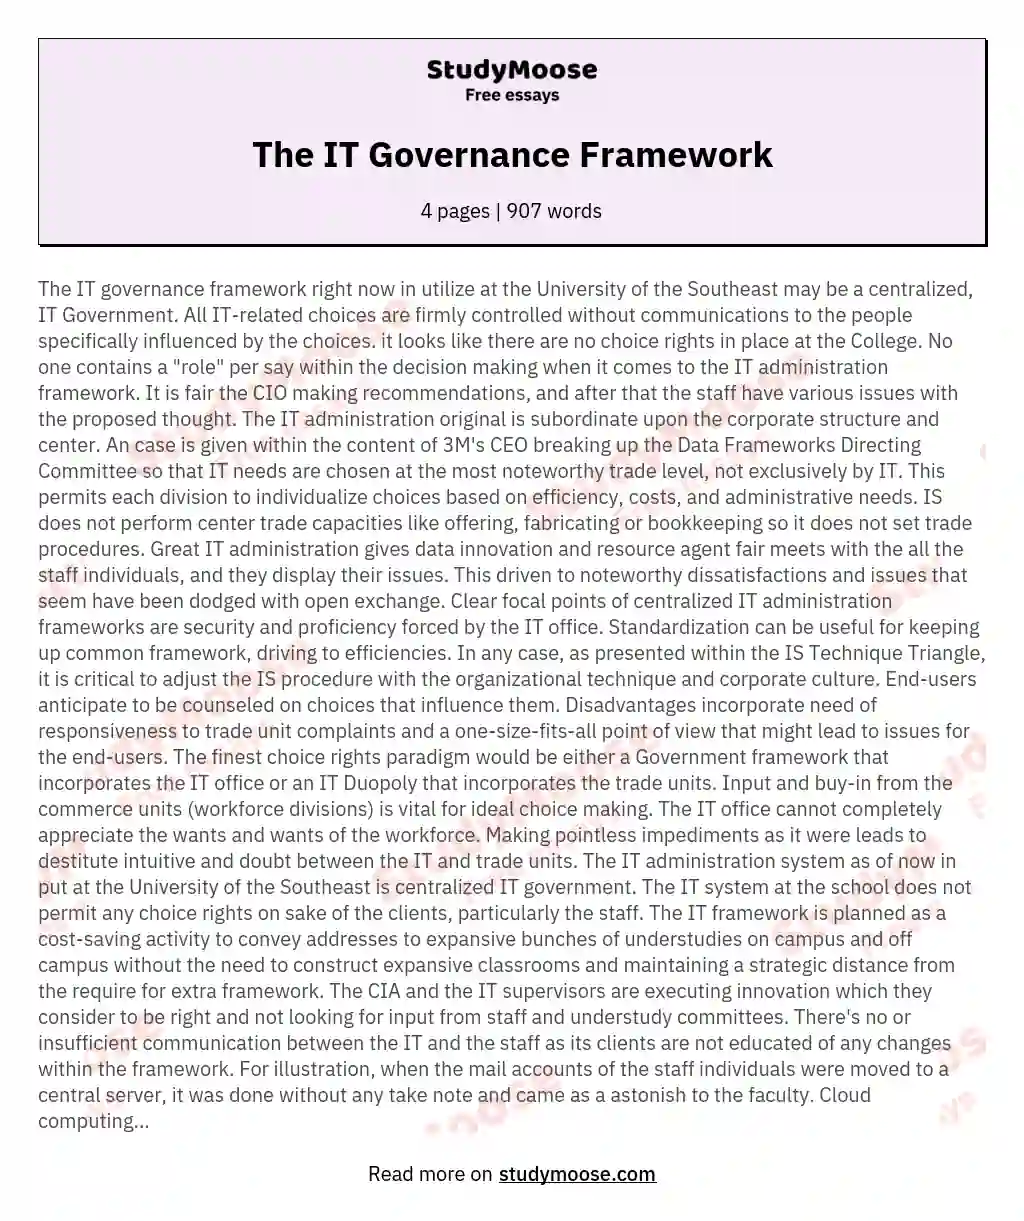 The IT Governance Framework essay